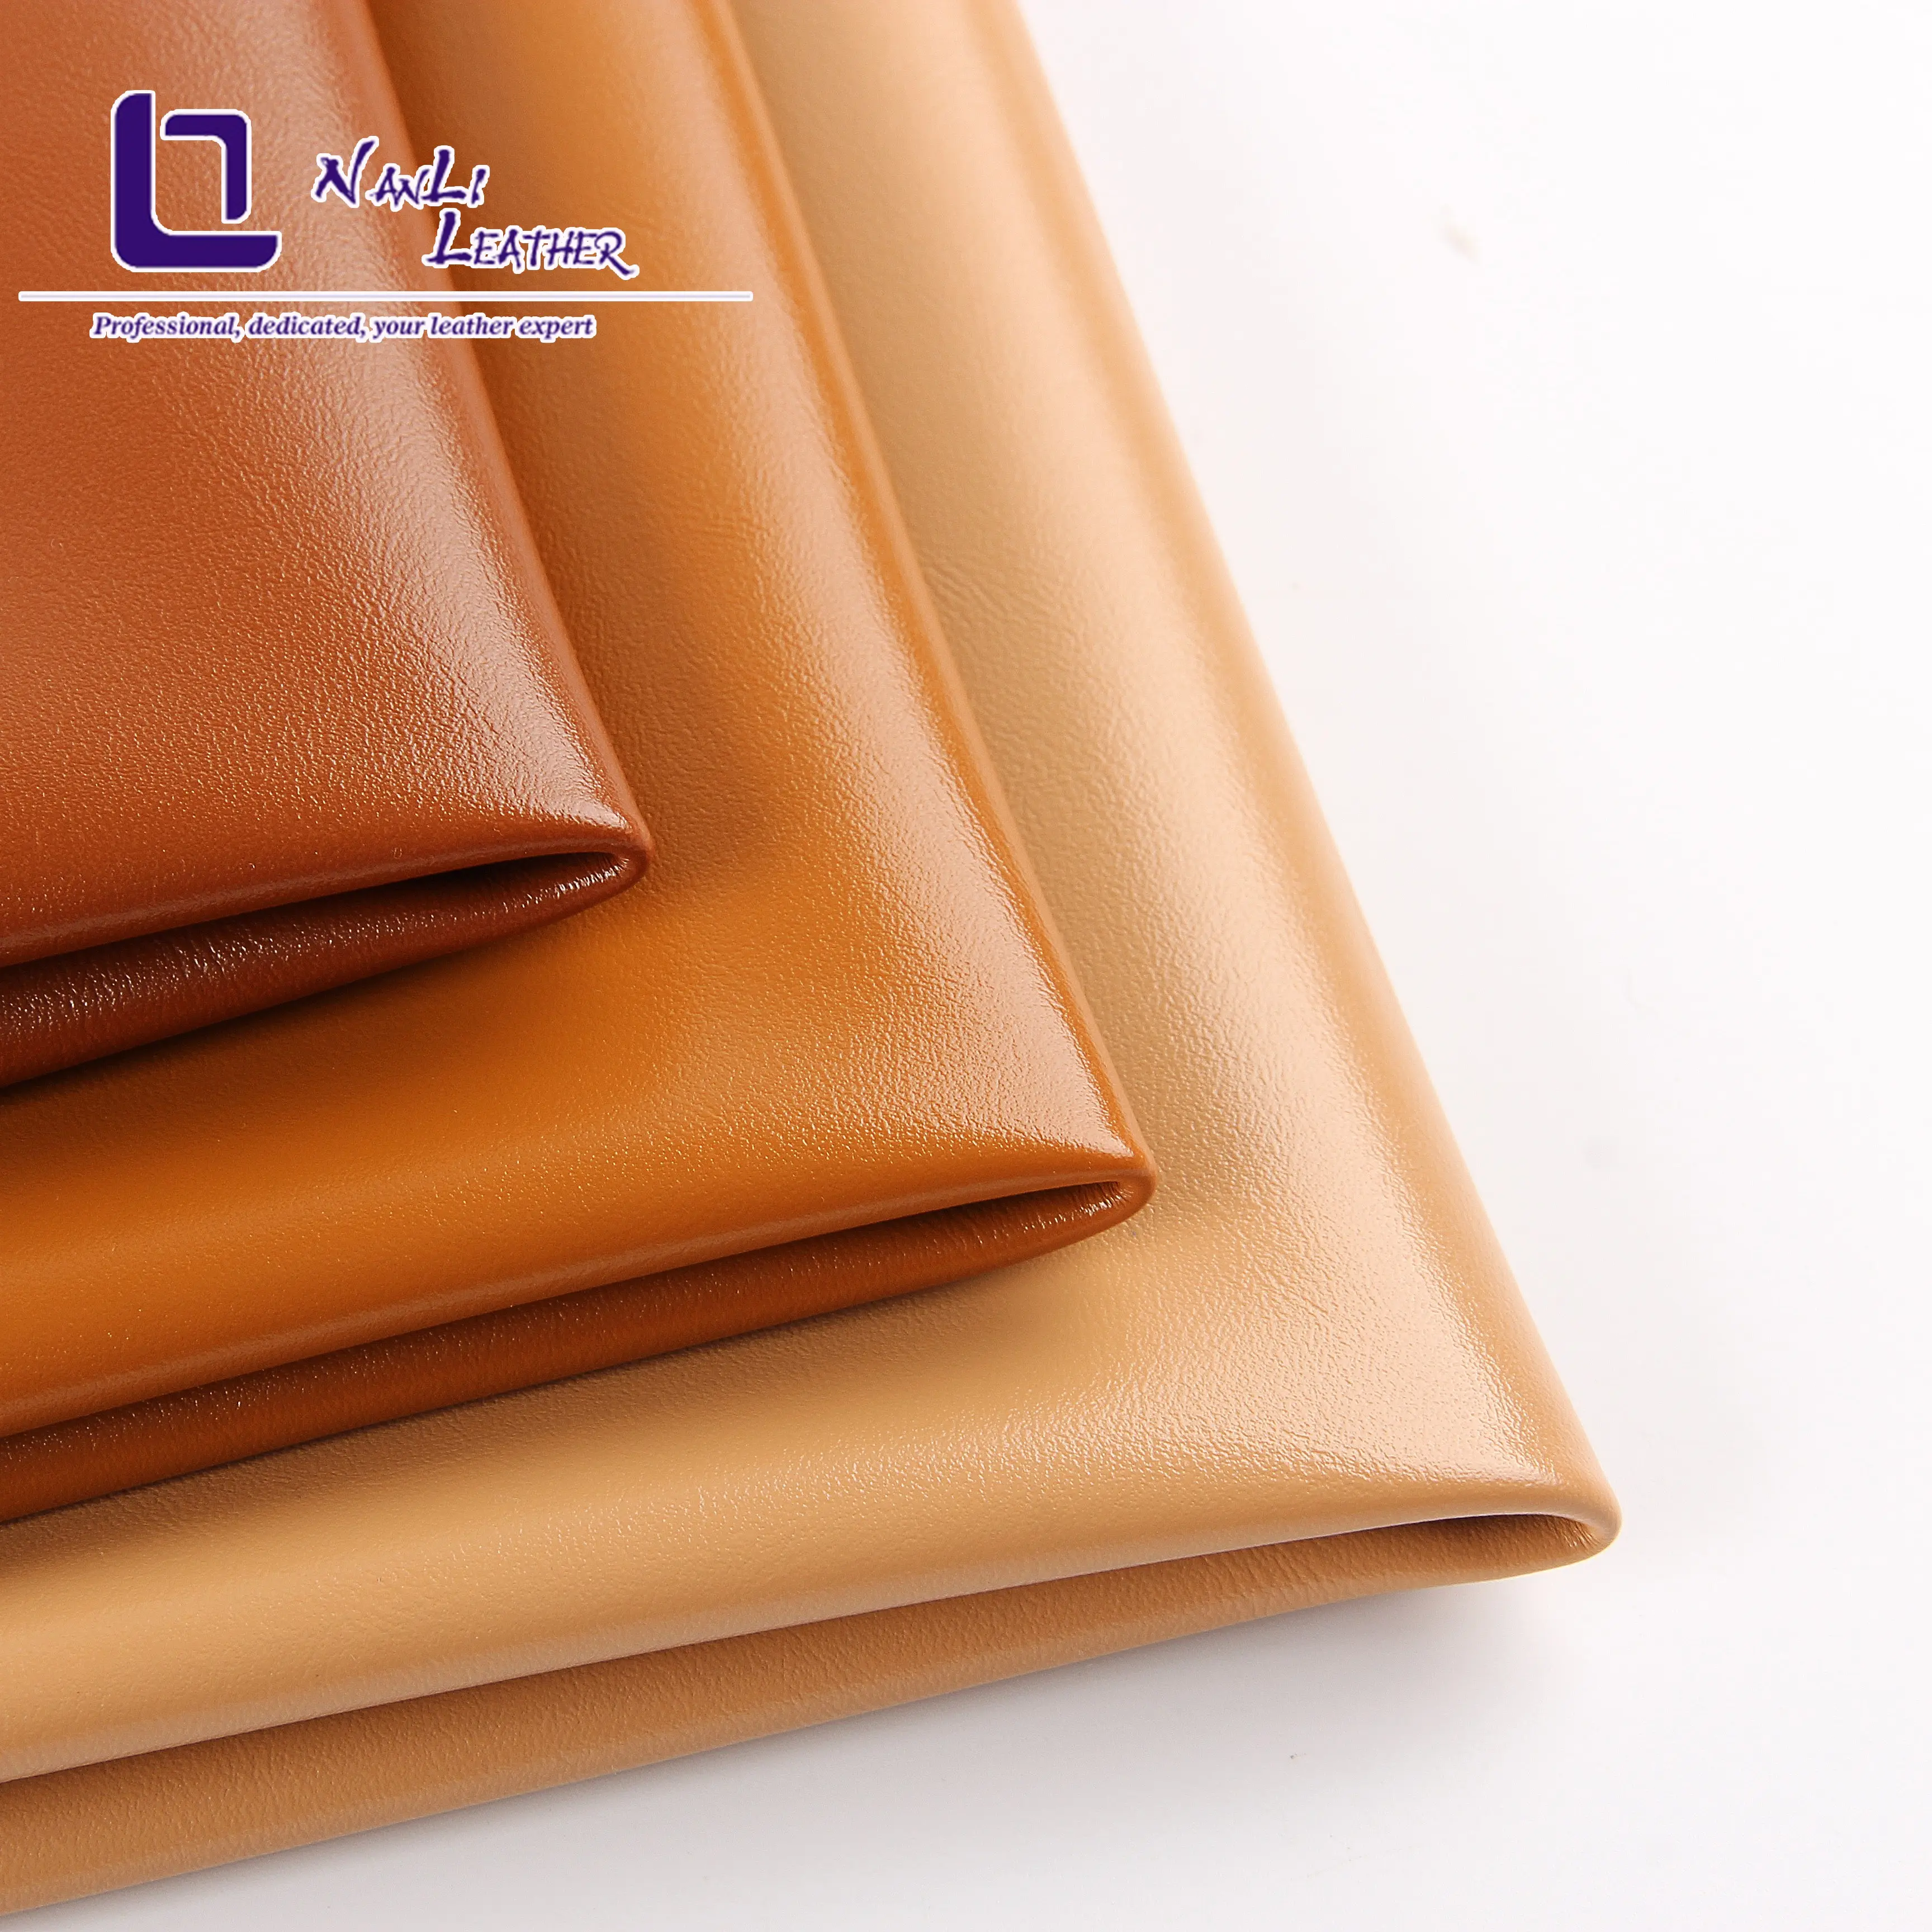 Handbags bags material pu hides pvc hard-wearing environmental imitation pu synthetic leather